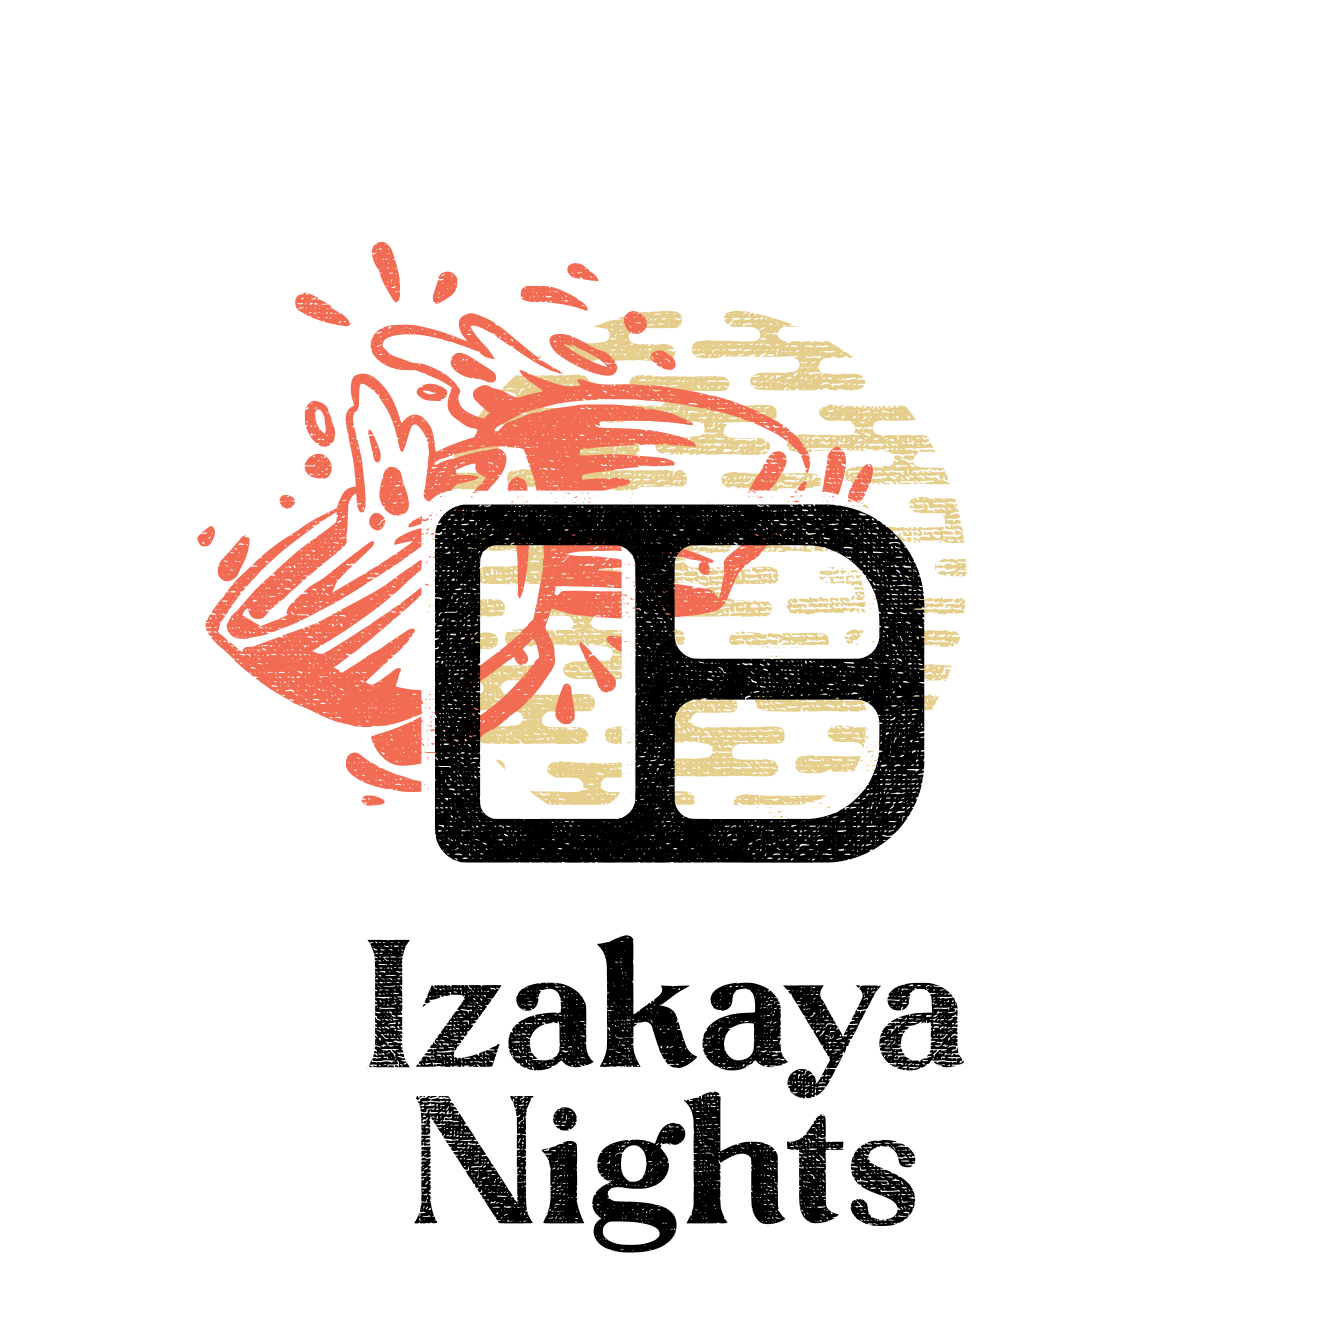 izakaya nights